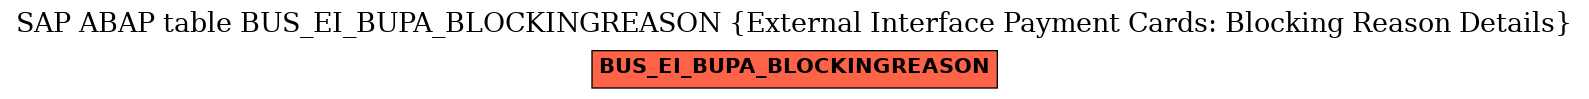 E-R Diagram for table BUS_EI_BUPA_BLOCKINGREASON (External Interface Payment Cards: Blocking Reason Details)